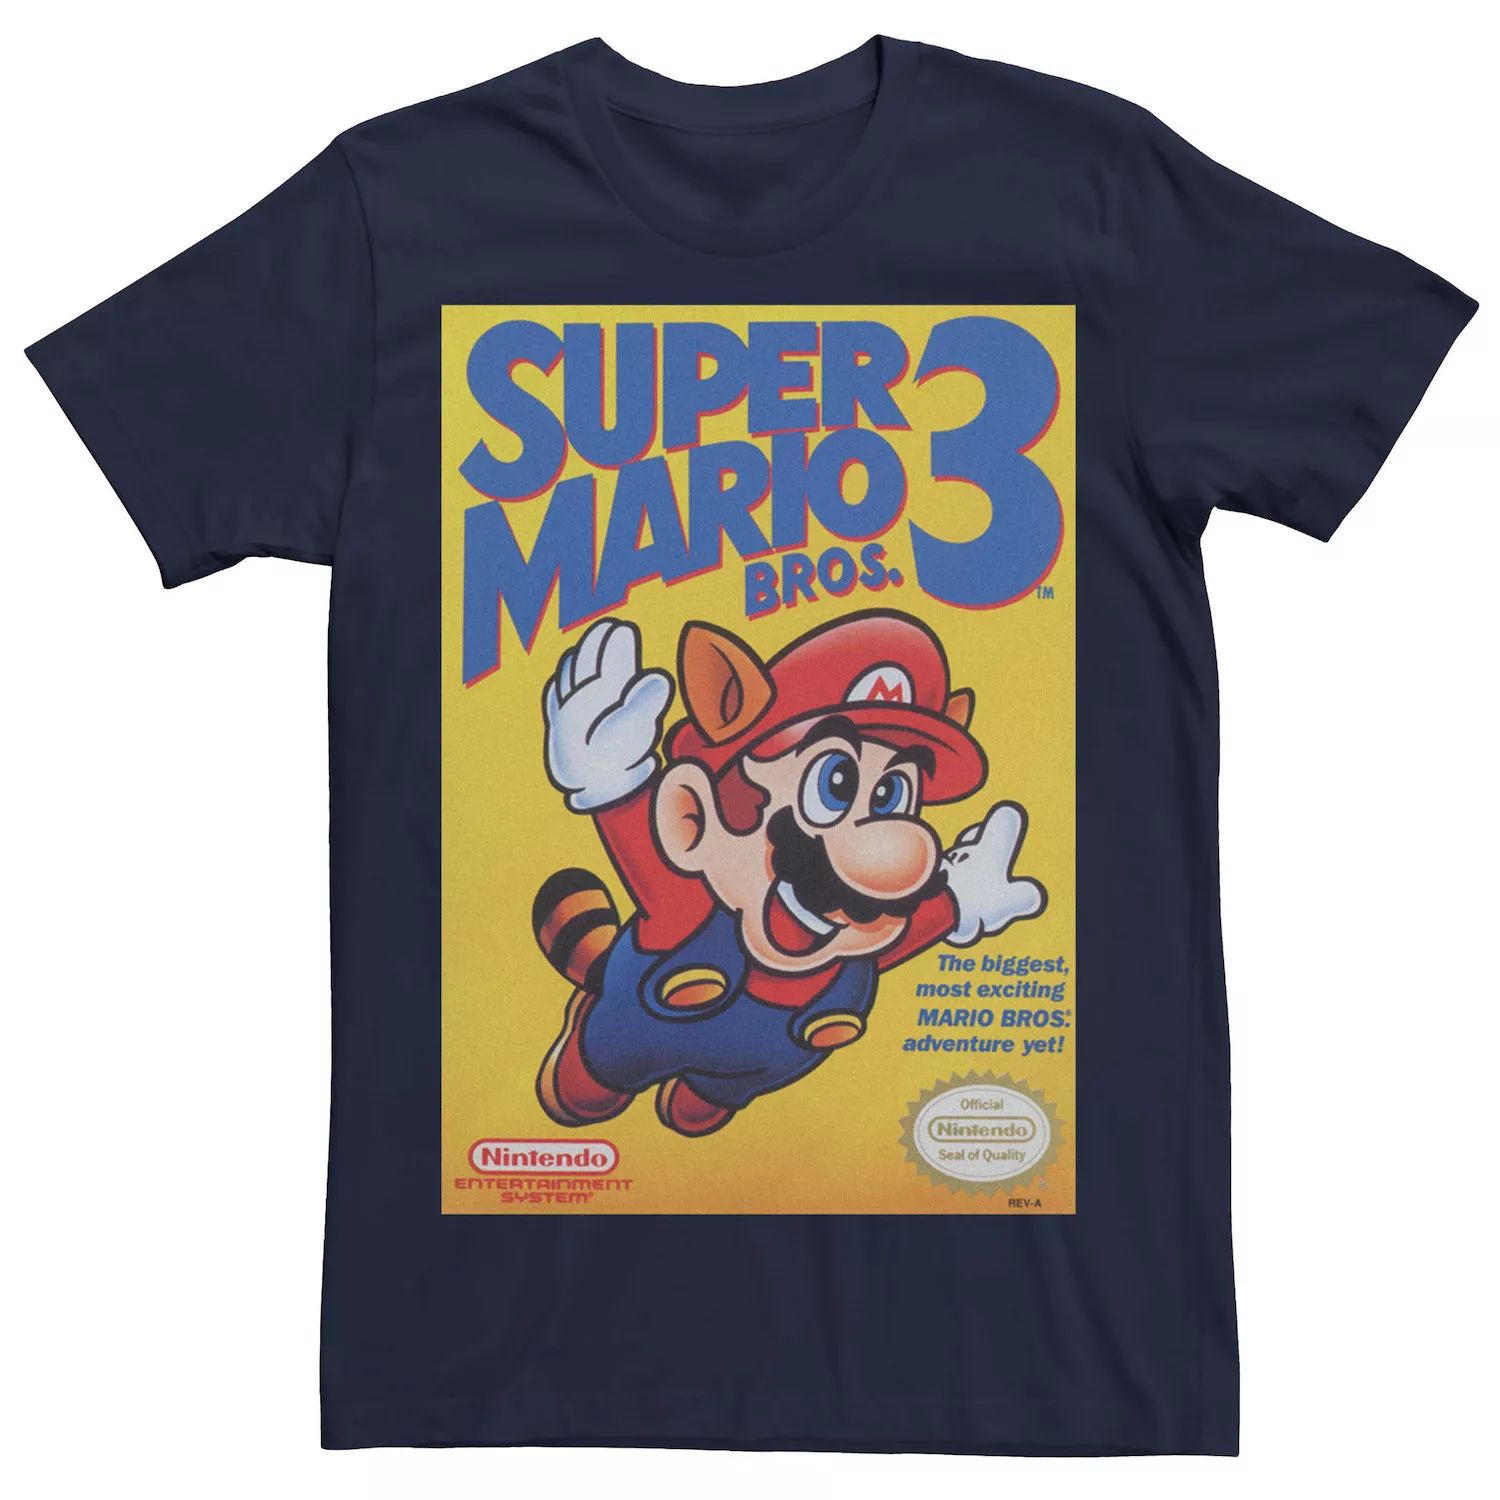 Мужская футболка с плакатом Super Mario Bros 3 Flying Raccoon Mario, Blue Licensed Character, синий